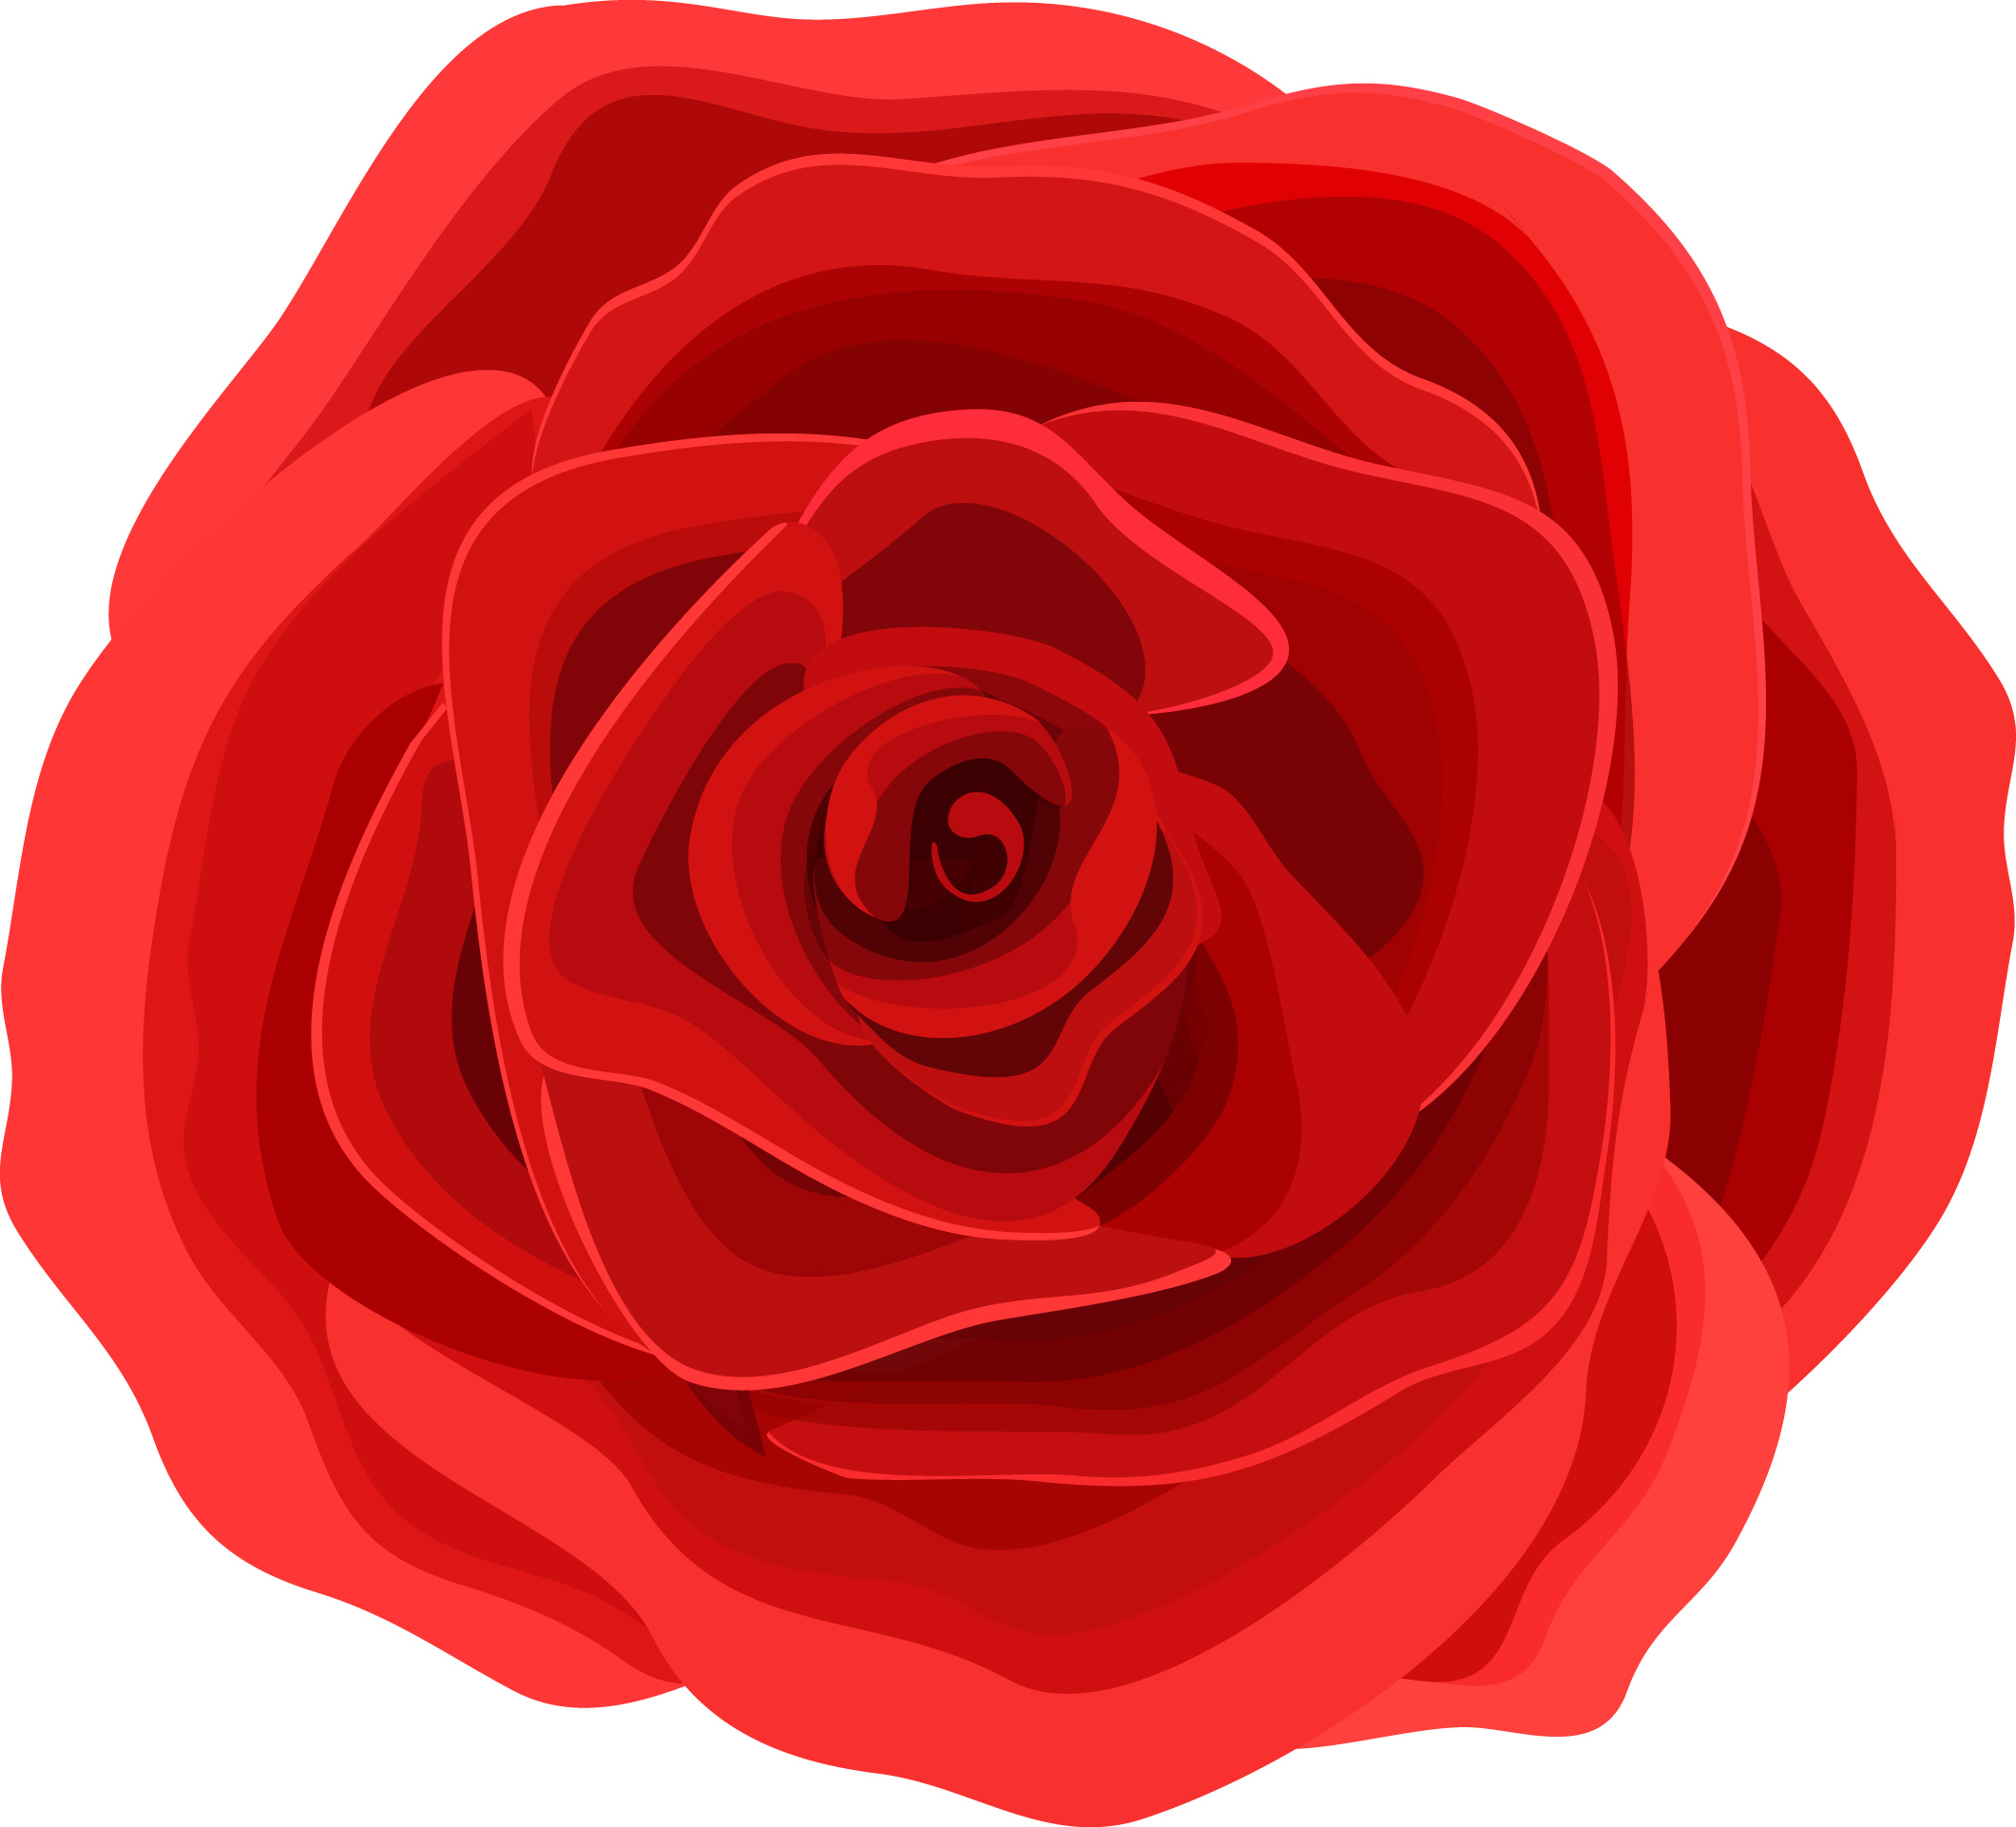 Beach Rose Graphic Design Flower - Red Rose Graphic (2121x1922)